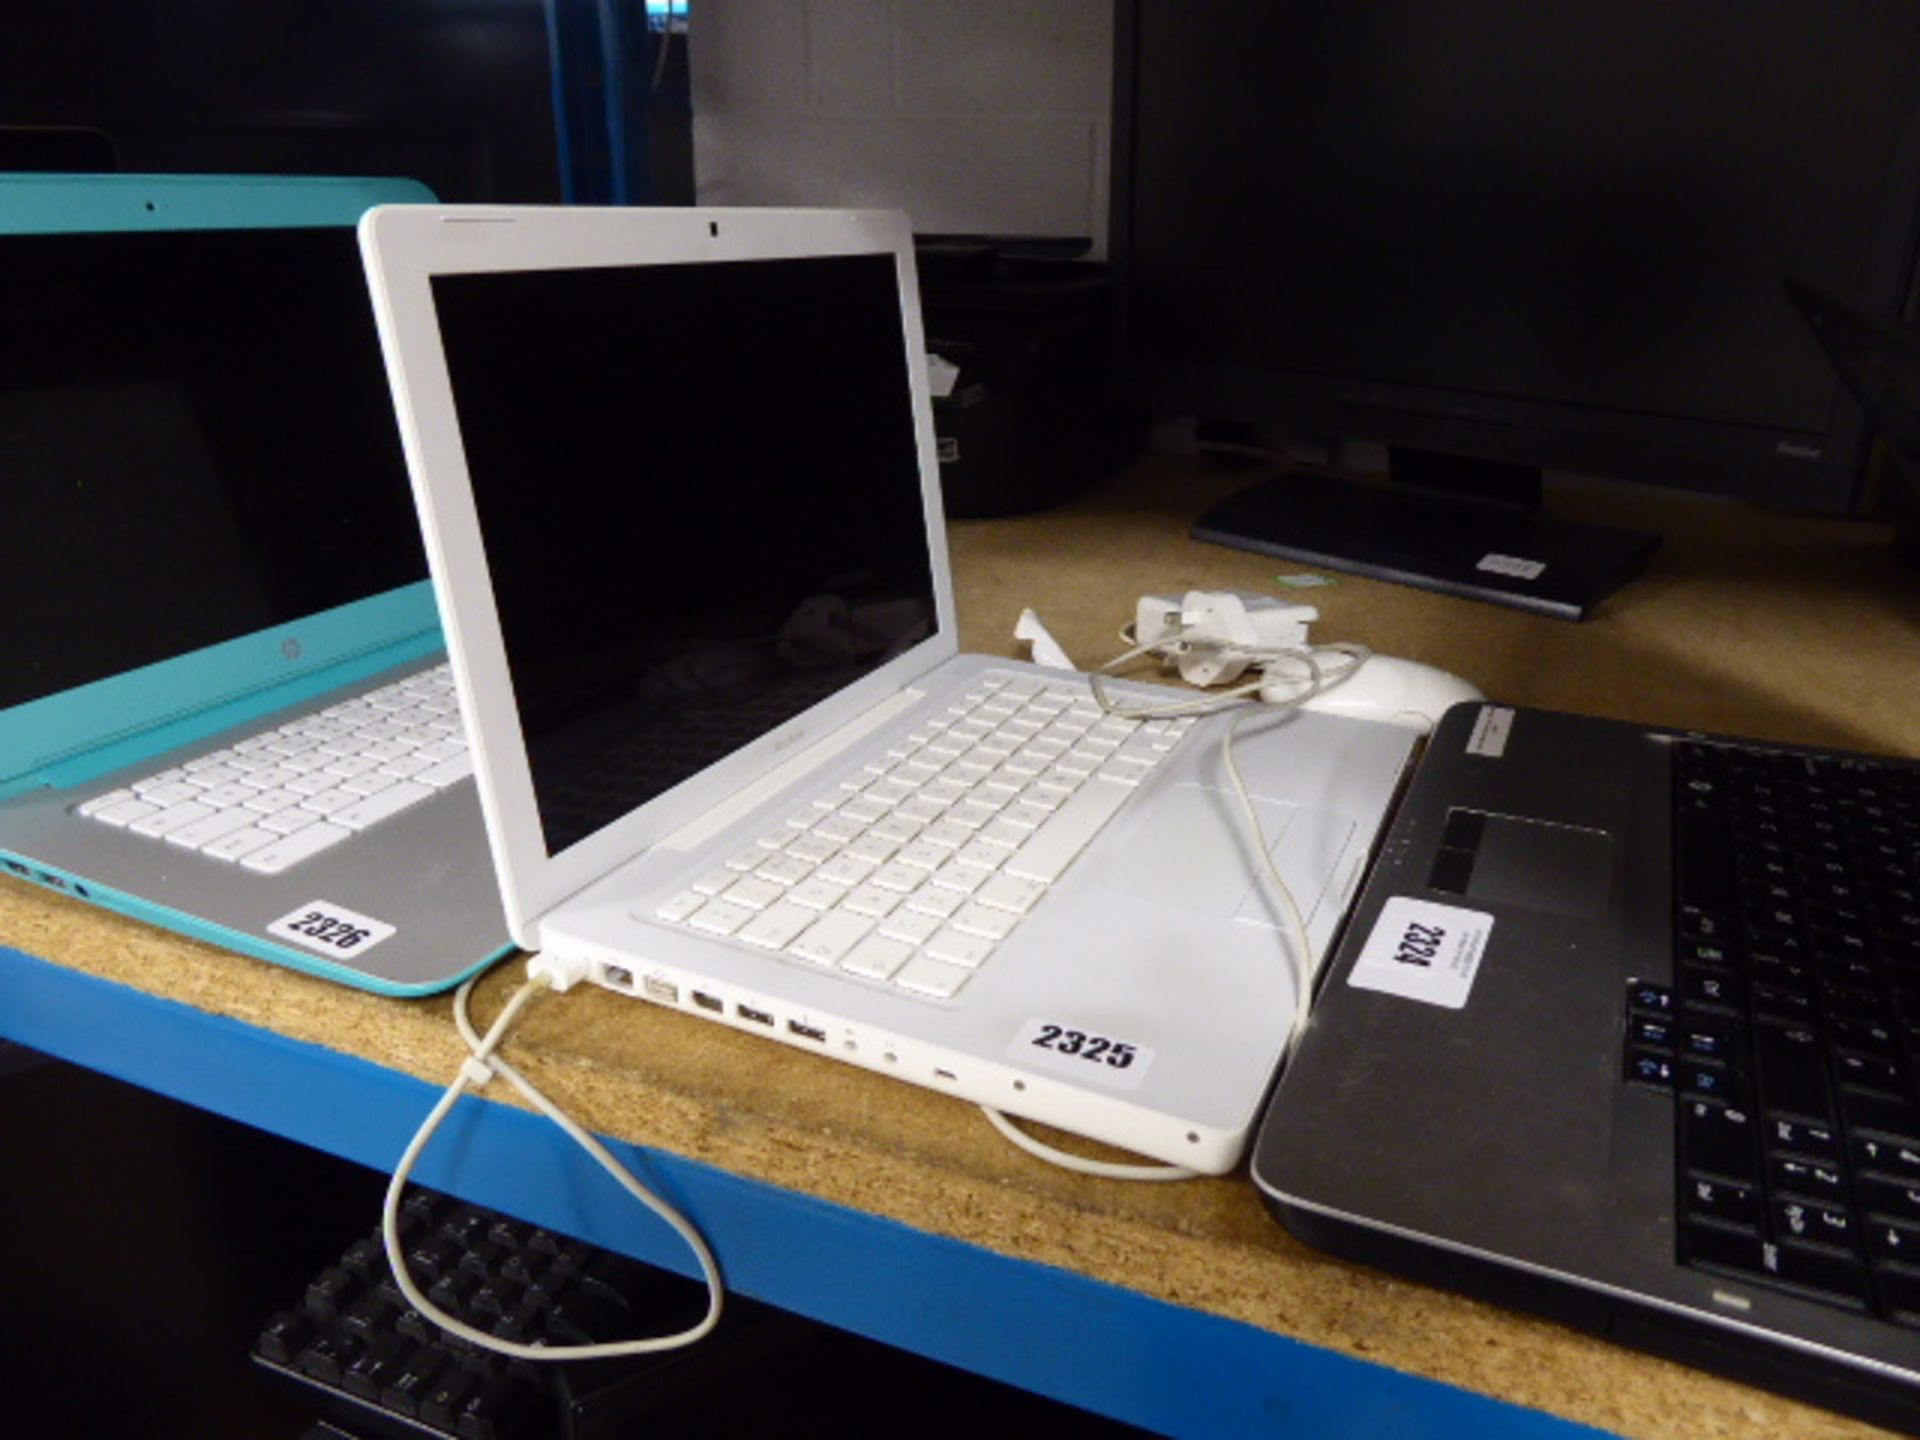 Apple Macbook laptop with psu model A1181